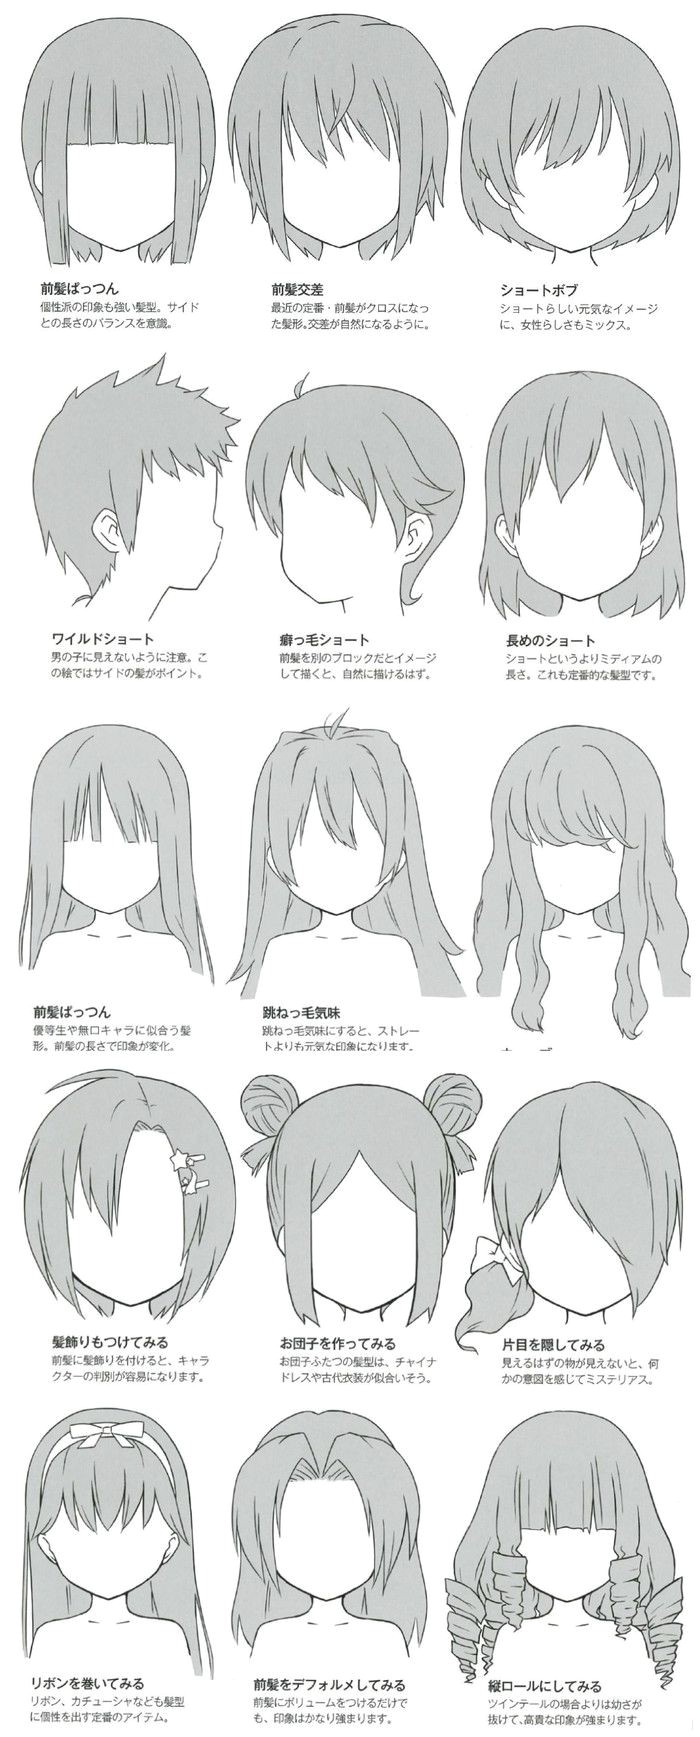 Manga hair tutorial and daily hair style inspiration